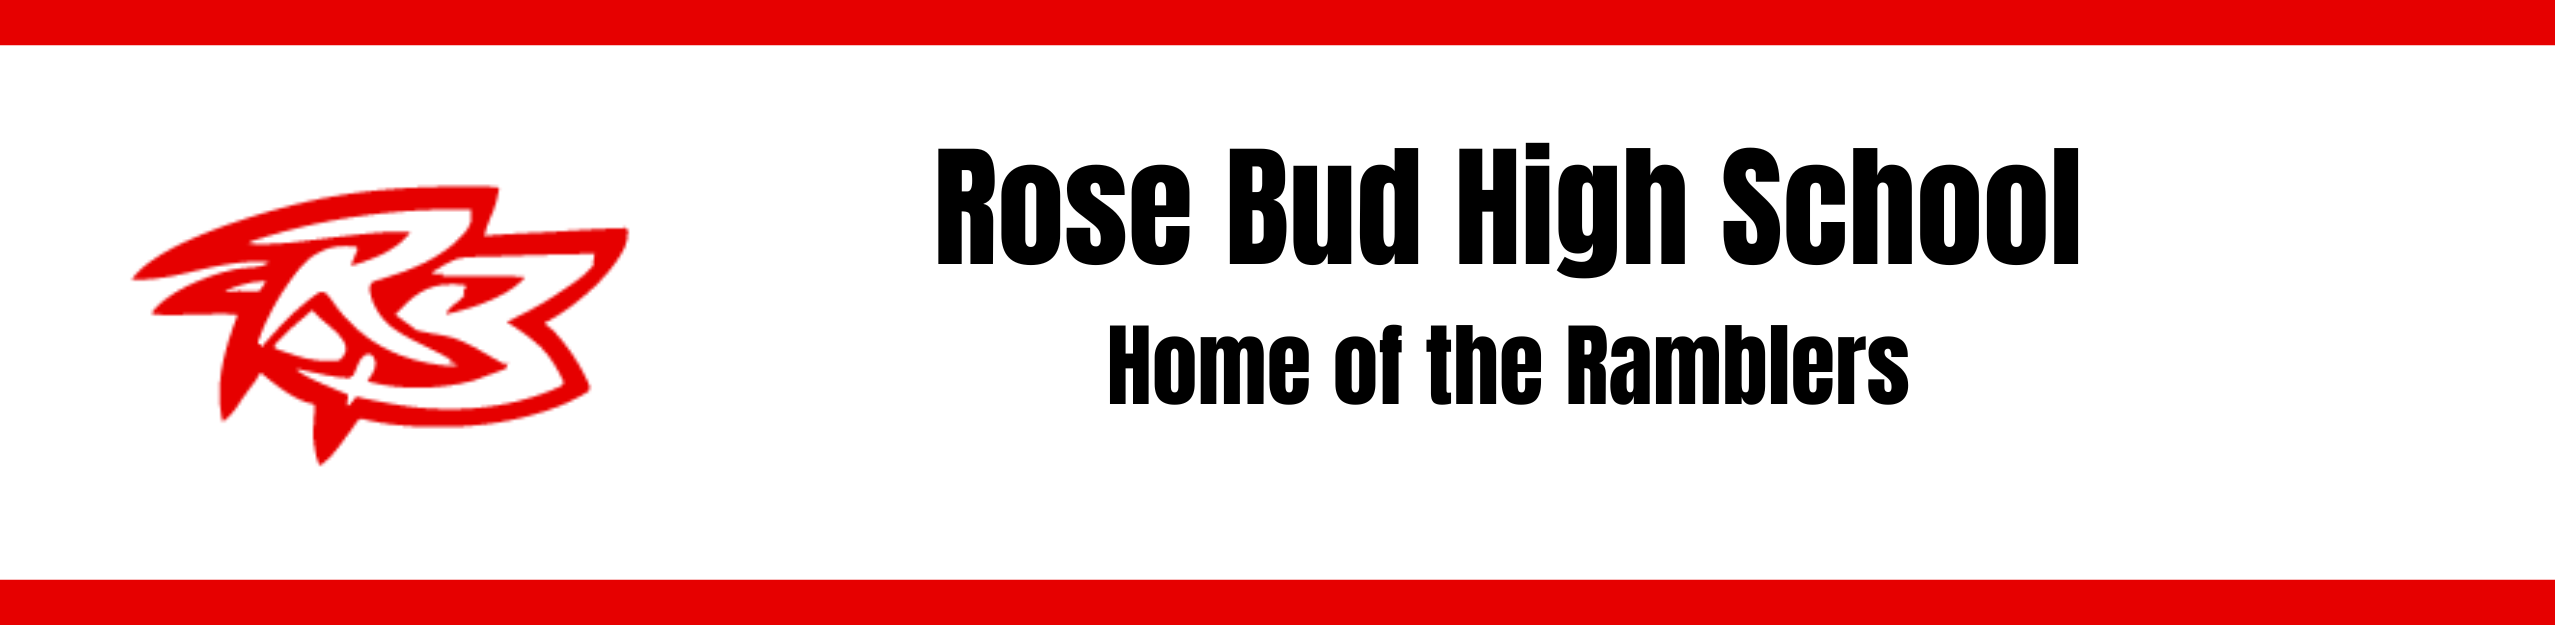 Rose Bud High School 